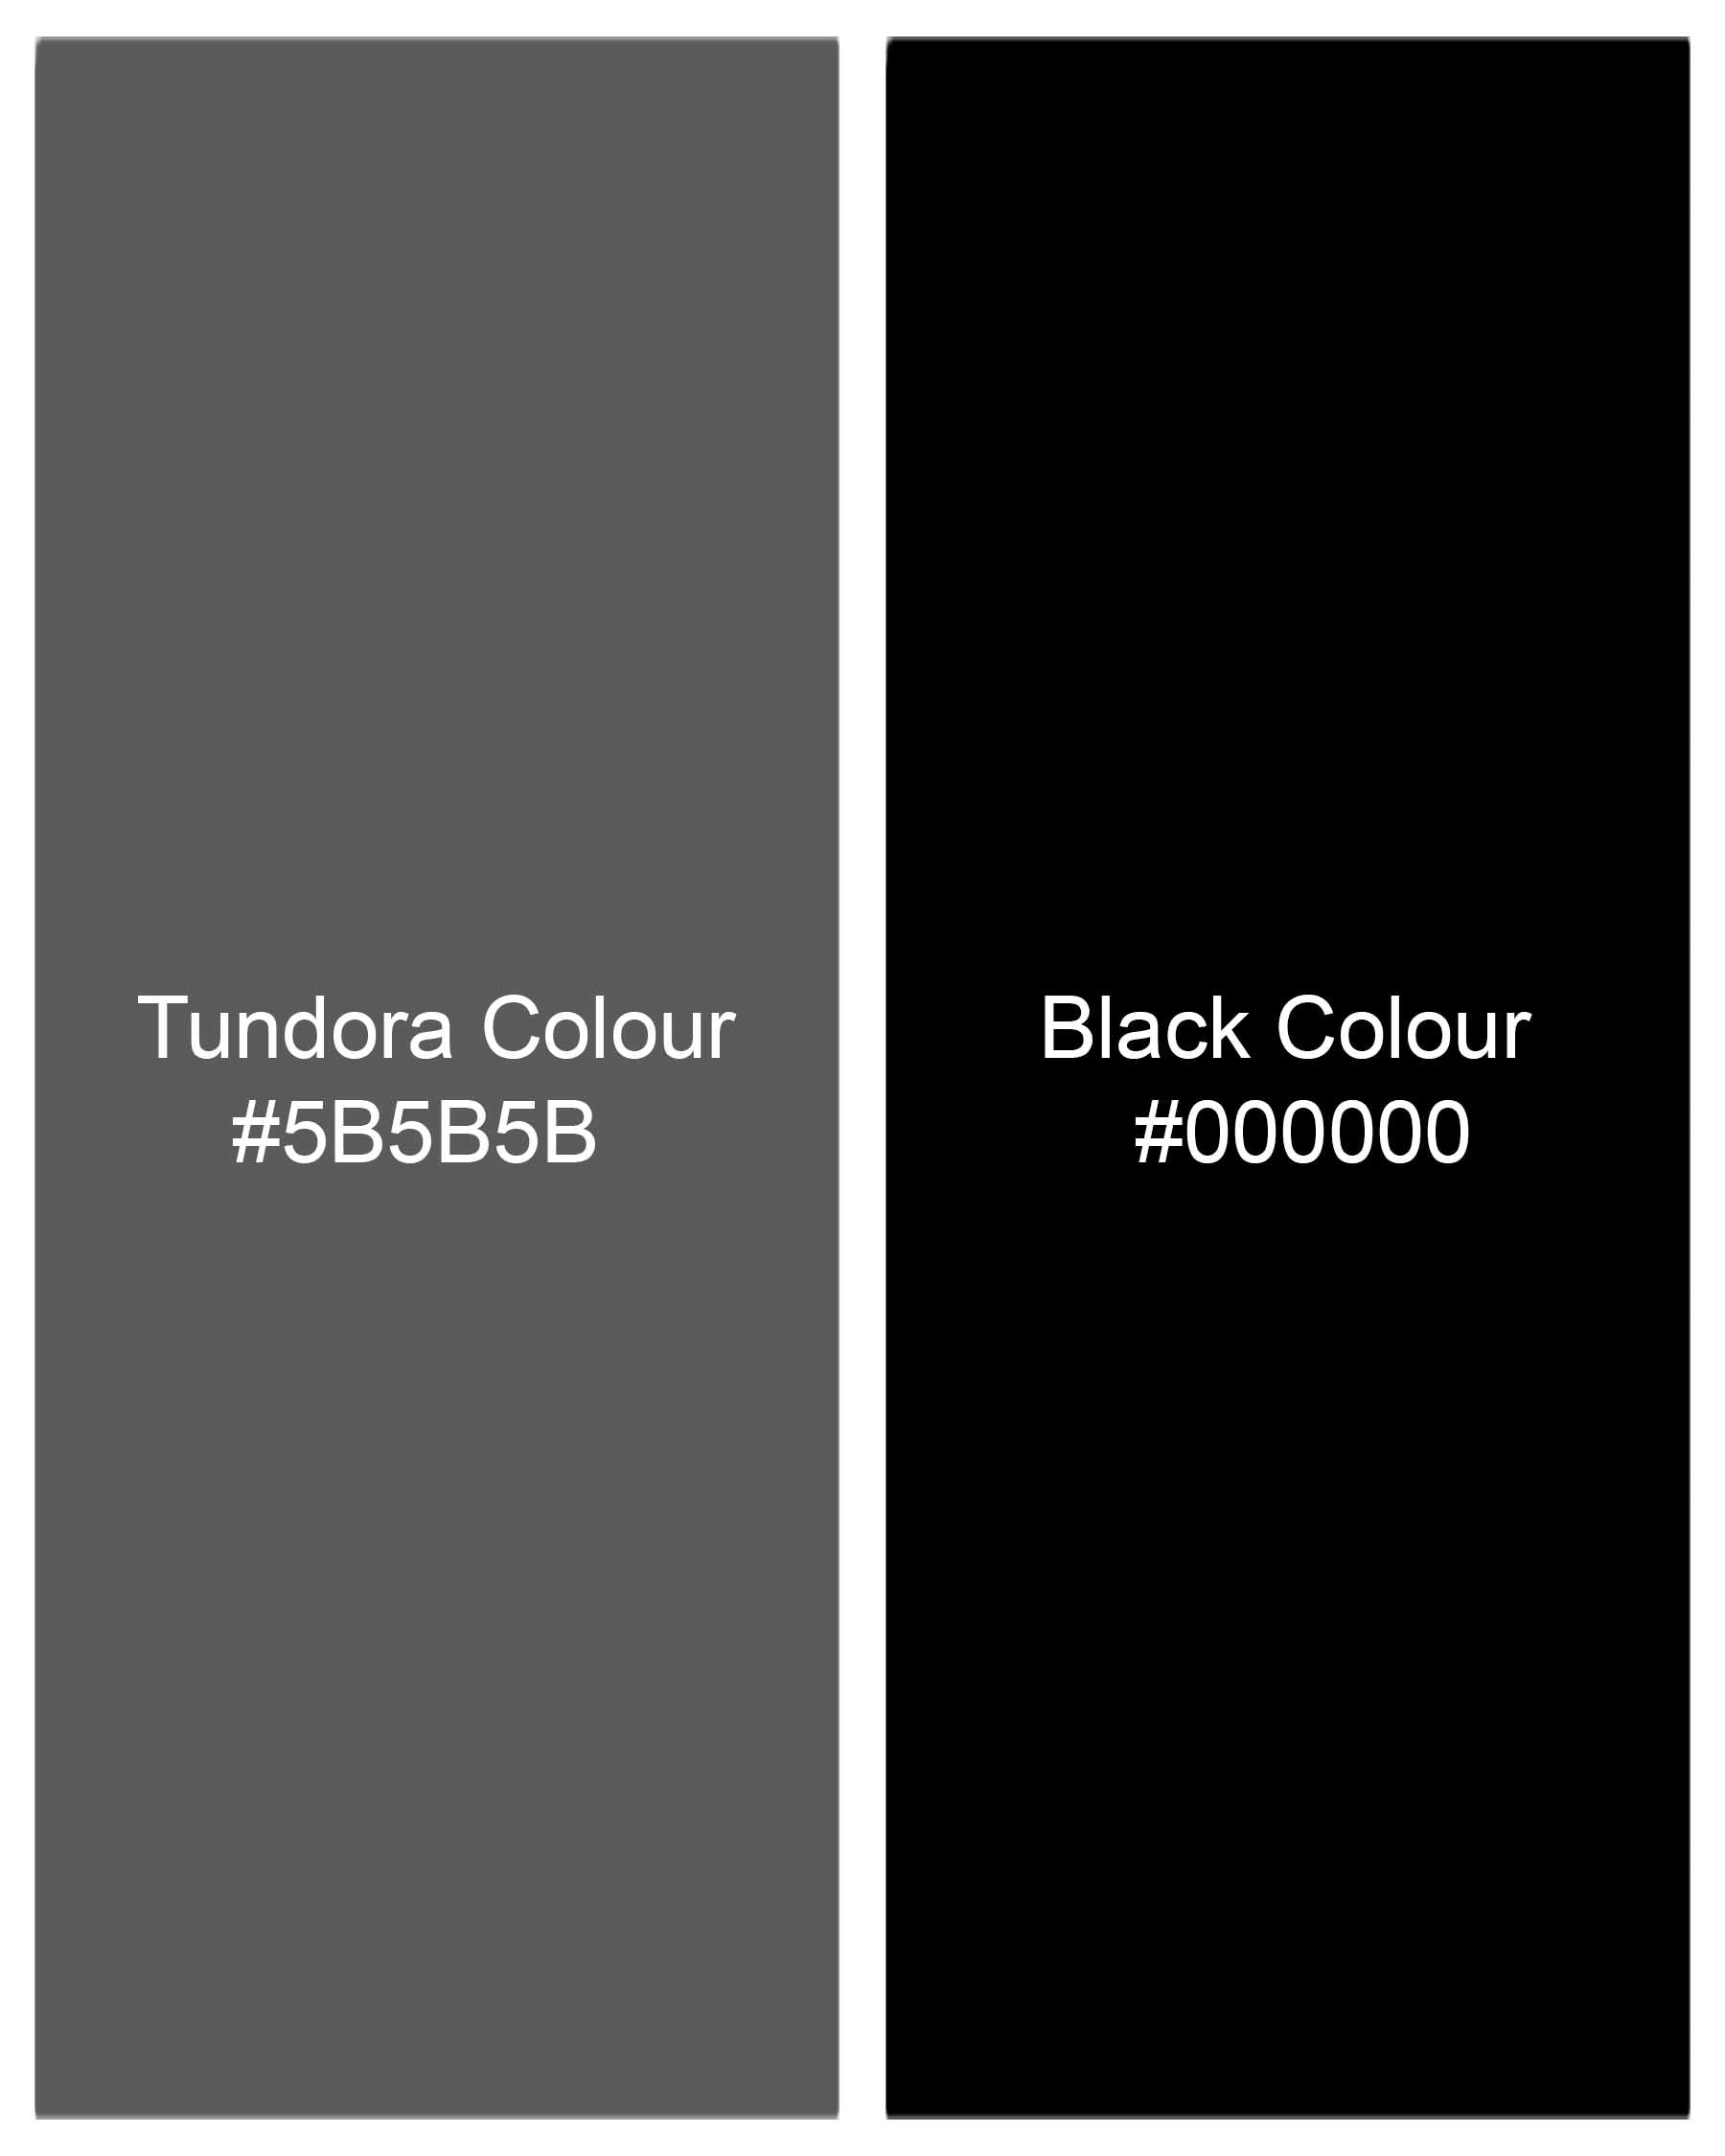 Jade Black and Tundora Gray Premium Cotton Shirt 7796-BLK-38, 7796-BLK-H-38, 7796-BLK-39,7796-BLK-H-39, 7796-BLK-40, 7796-BLK-H-40, 7796-BLK-42, 7796-BLK-H-42, 7796-BLK-44, 7796-BLK-H-44, 7796-BLK-46, 7796-BLK-H-46, 7796-BLK-48, 7796-BLK-H-48, 7796-BLK-50, 7796-BLK-H-50, 7796-BLK-52, 7796-BLK-H-52